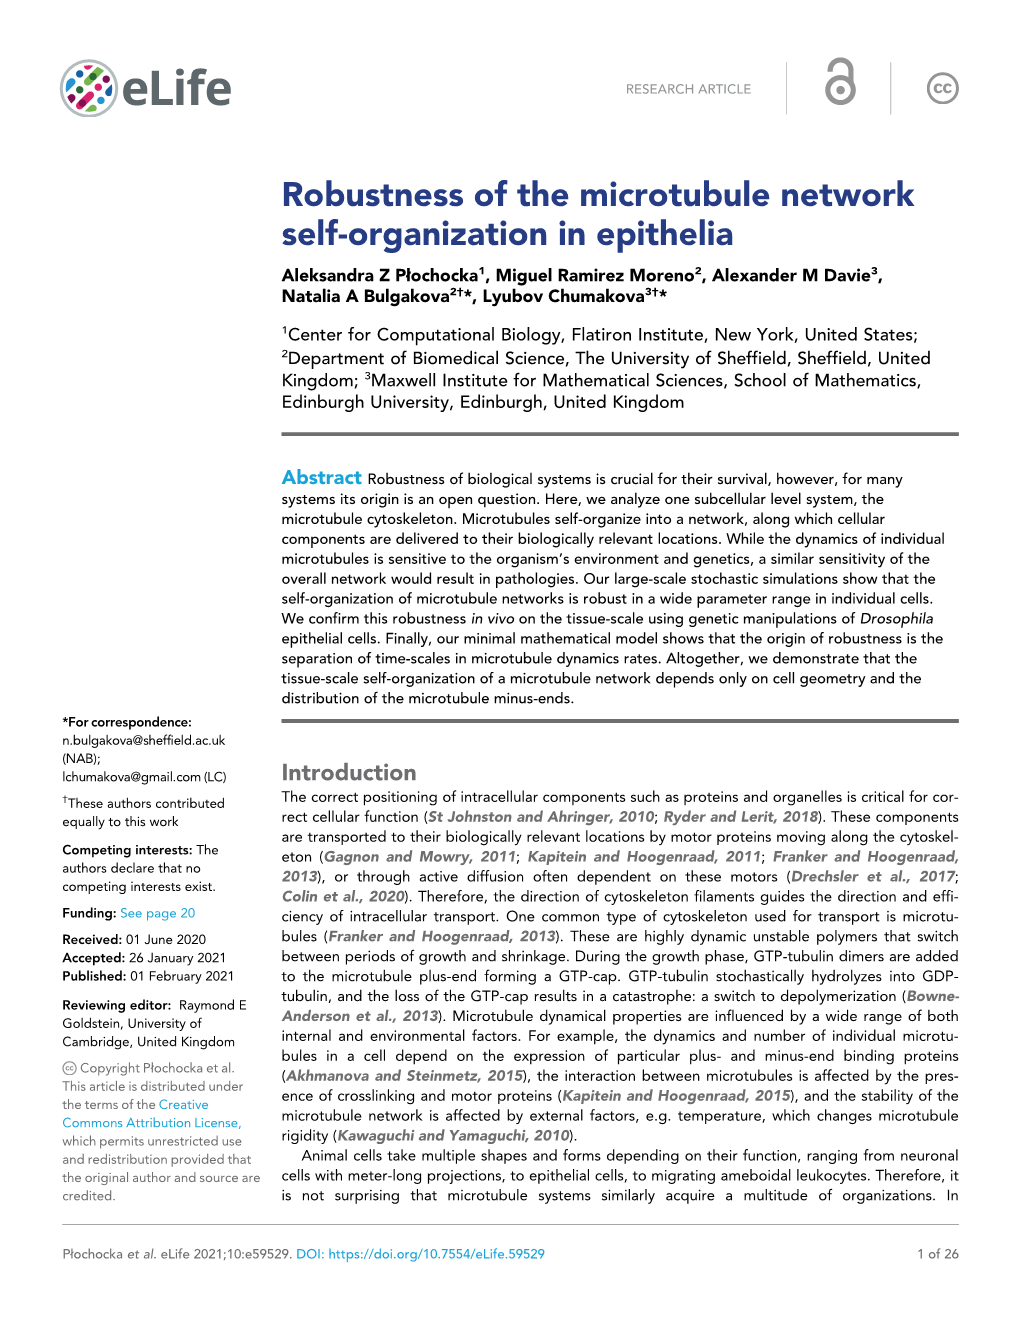 Robustness of the Microtubule Network Self-Organization in Epithelia